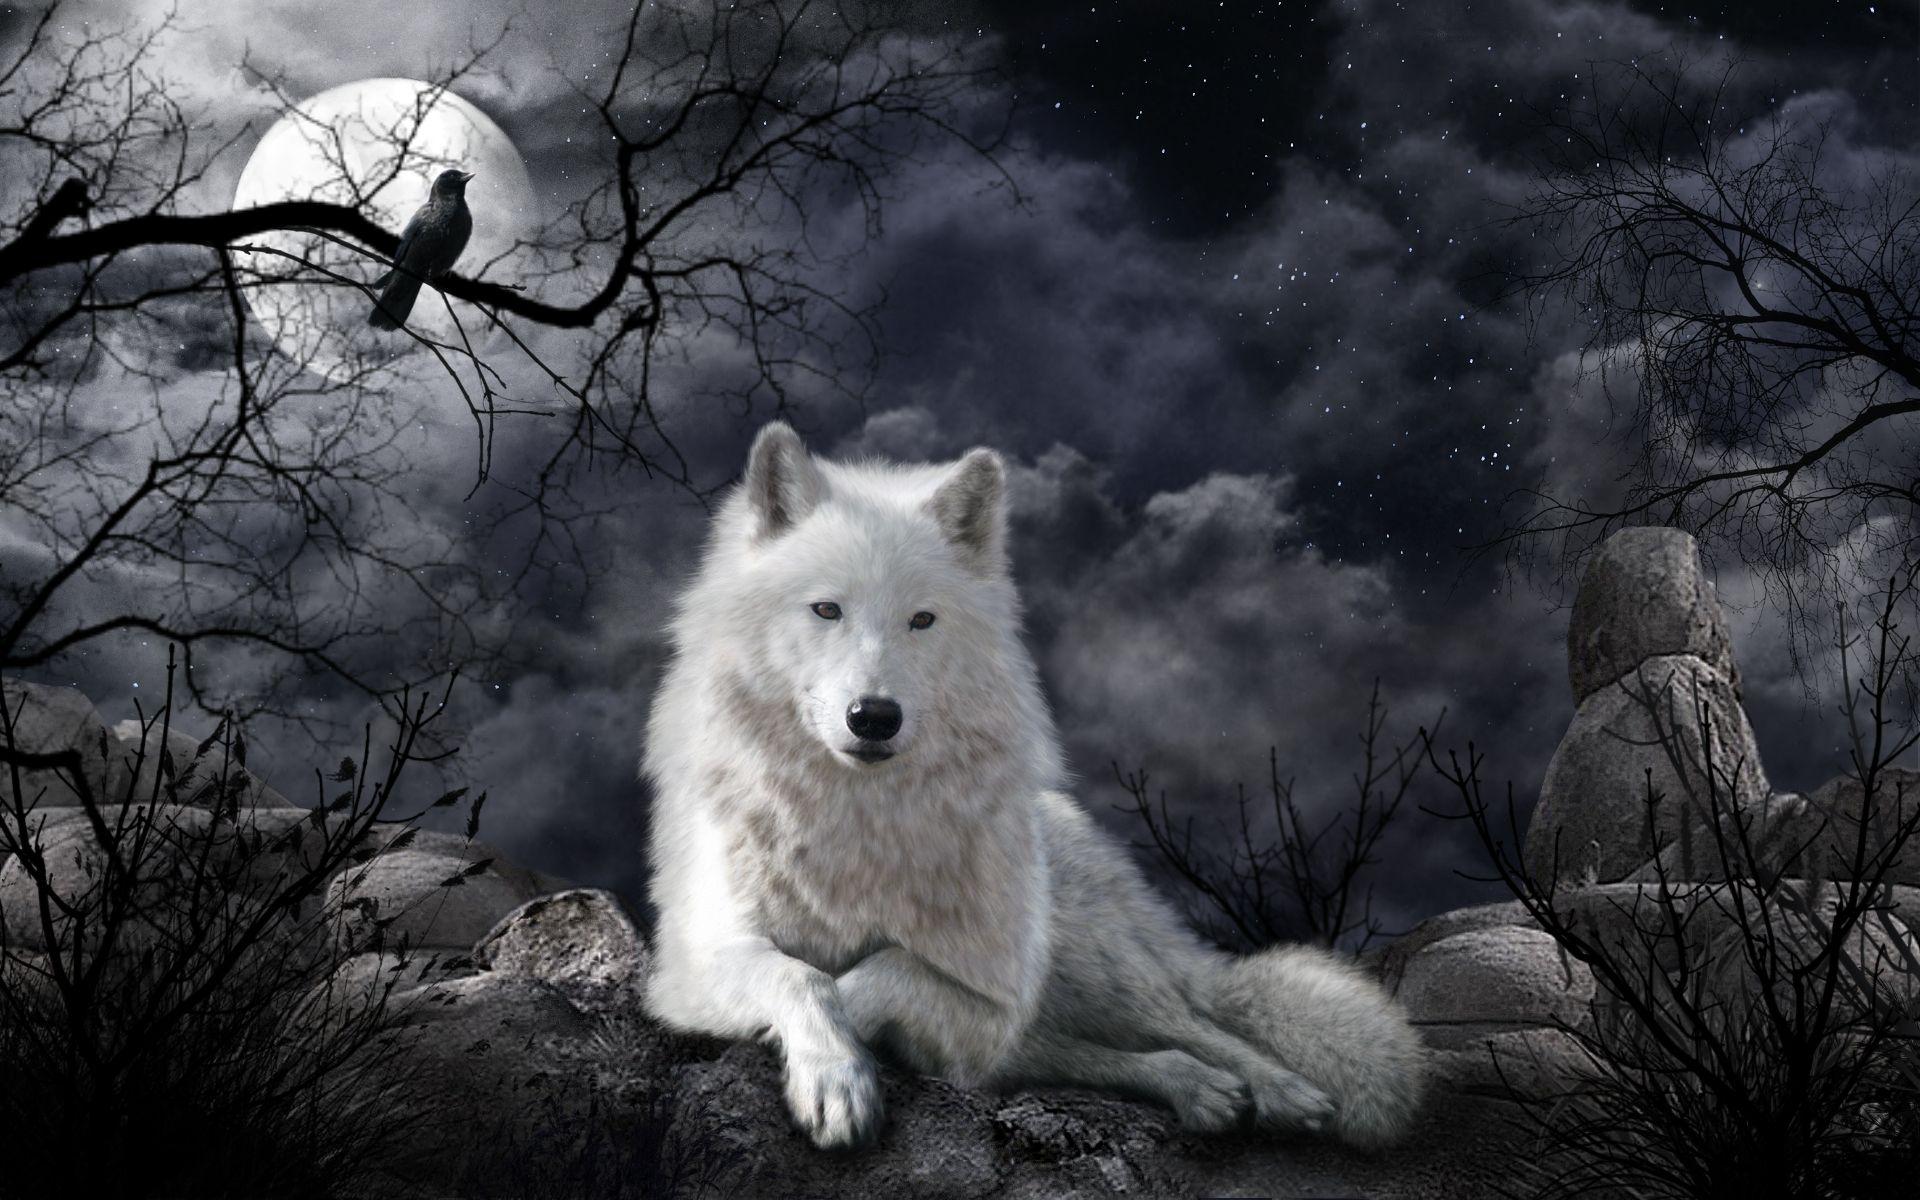 Wolf Desktop Wallpapers - Top Free Wolf